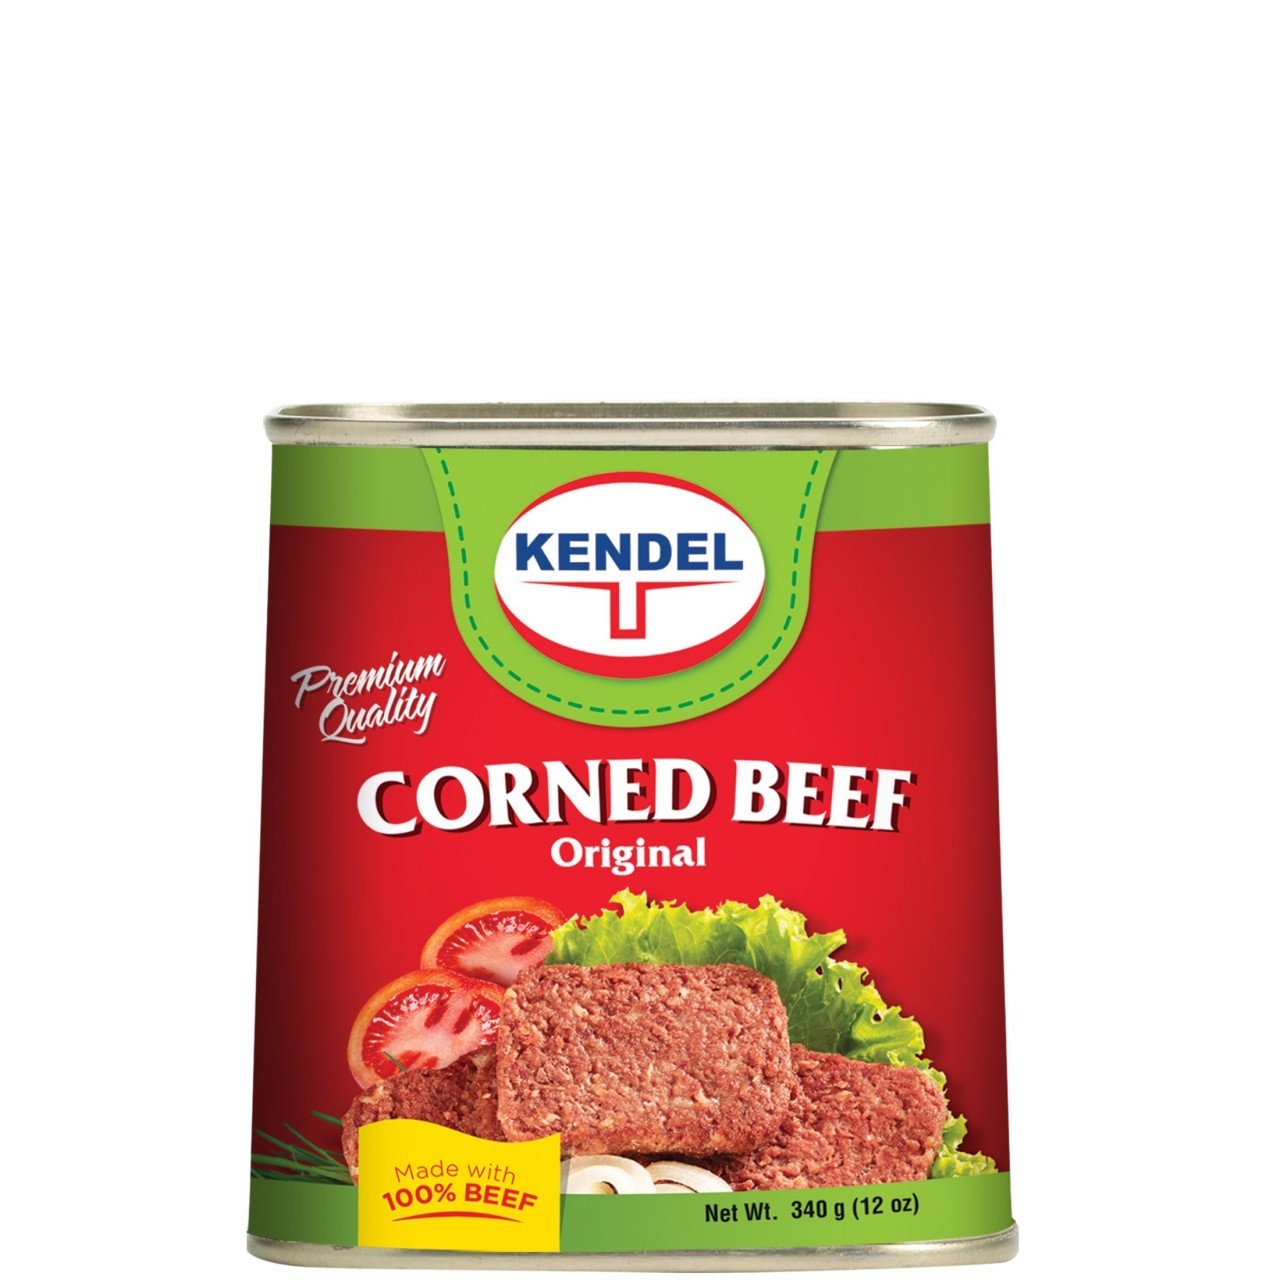 KENDEL CORNED BEEF 12oz